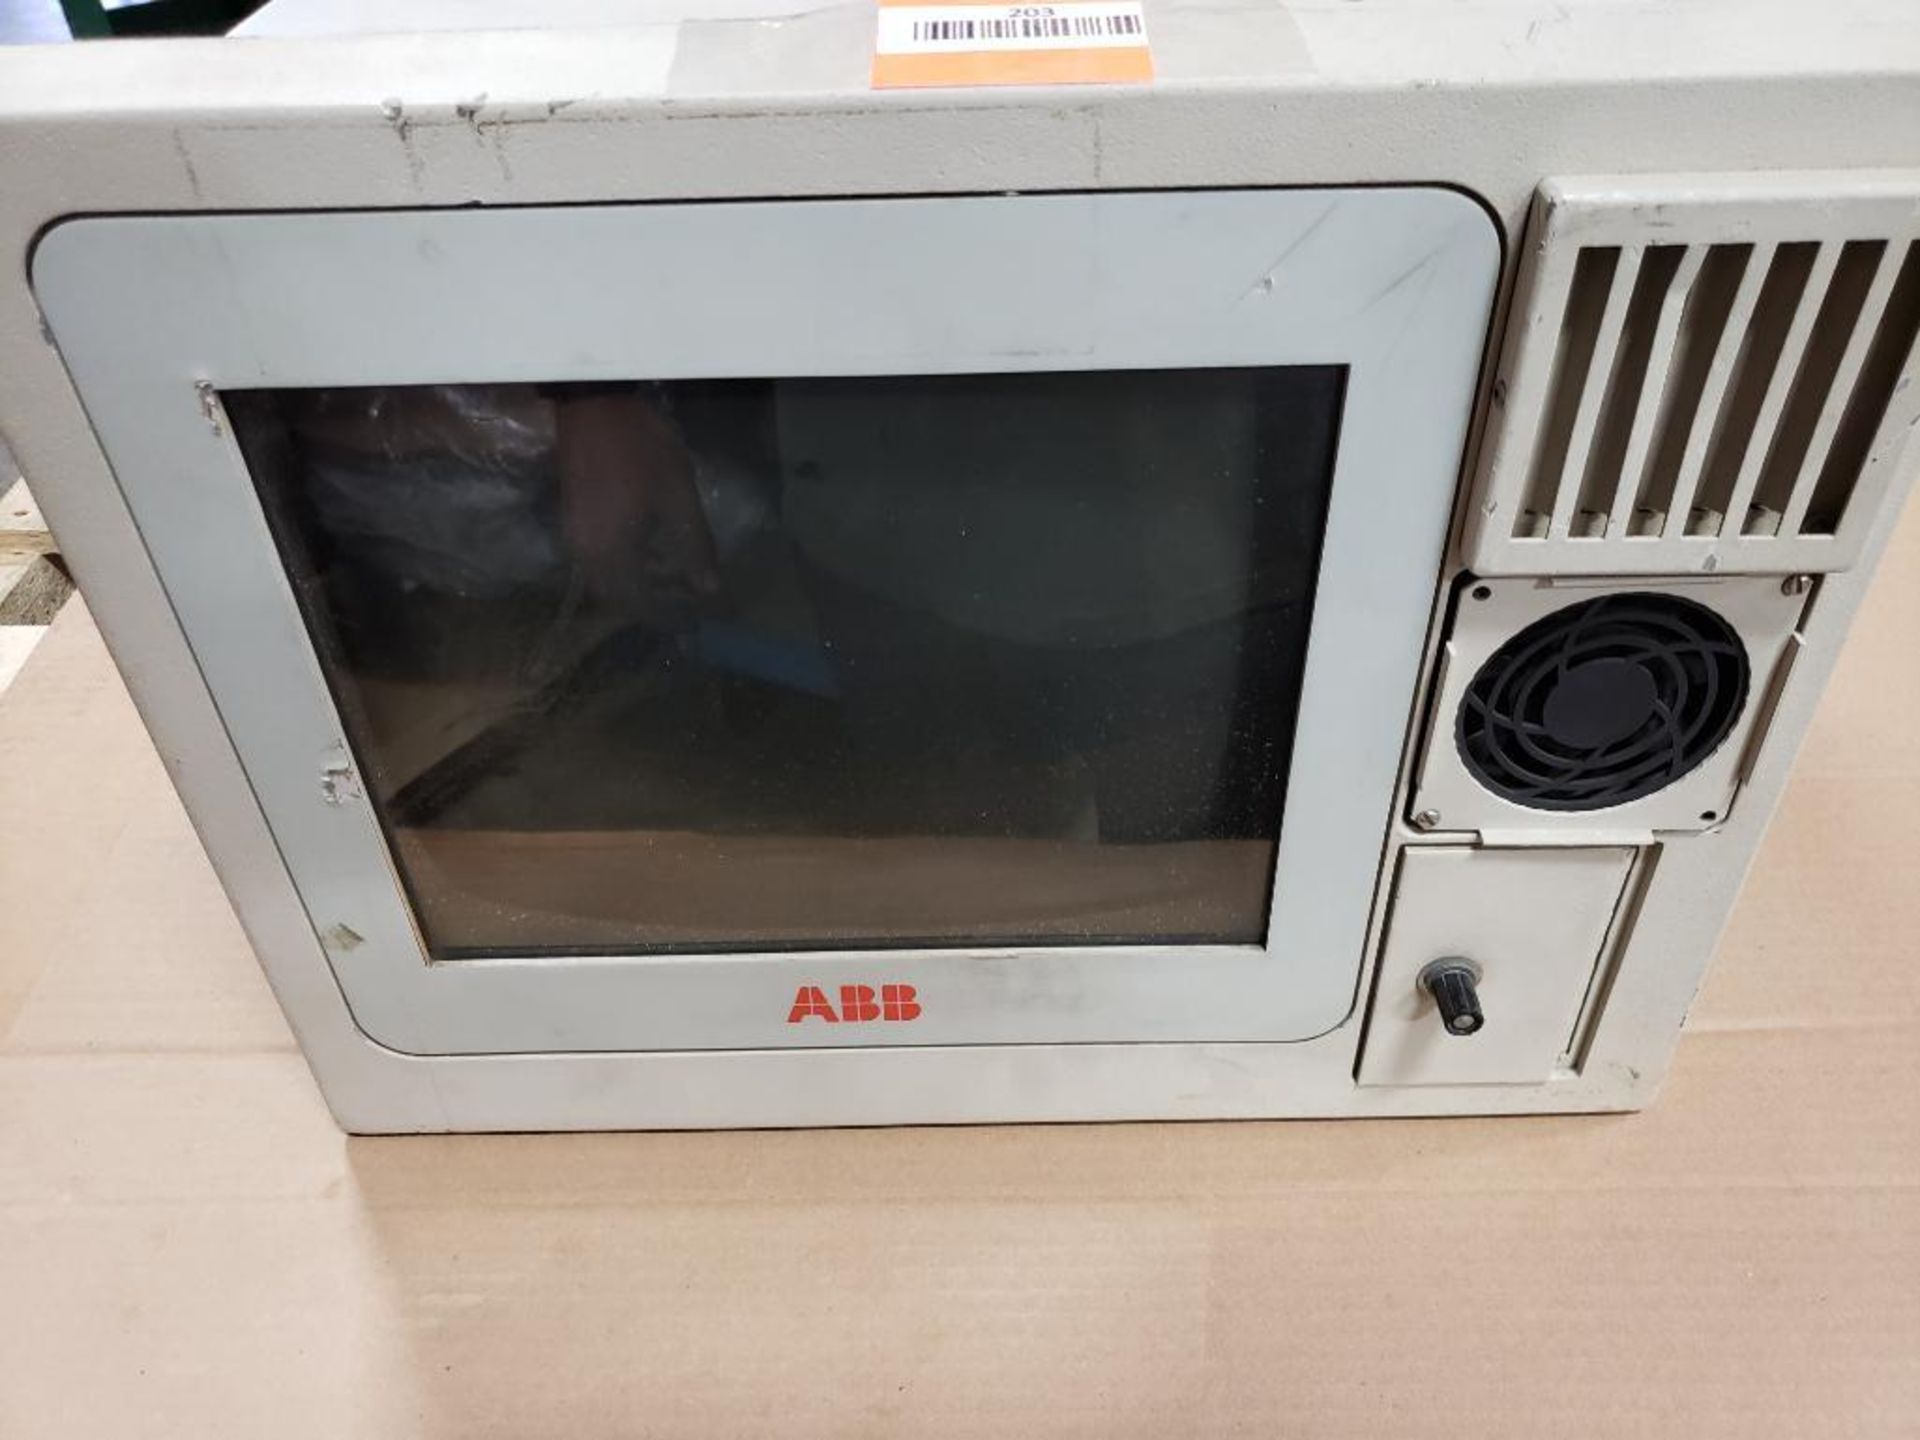 ABB PCS computer.